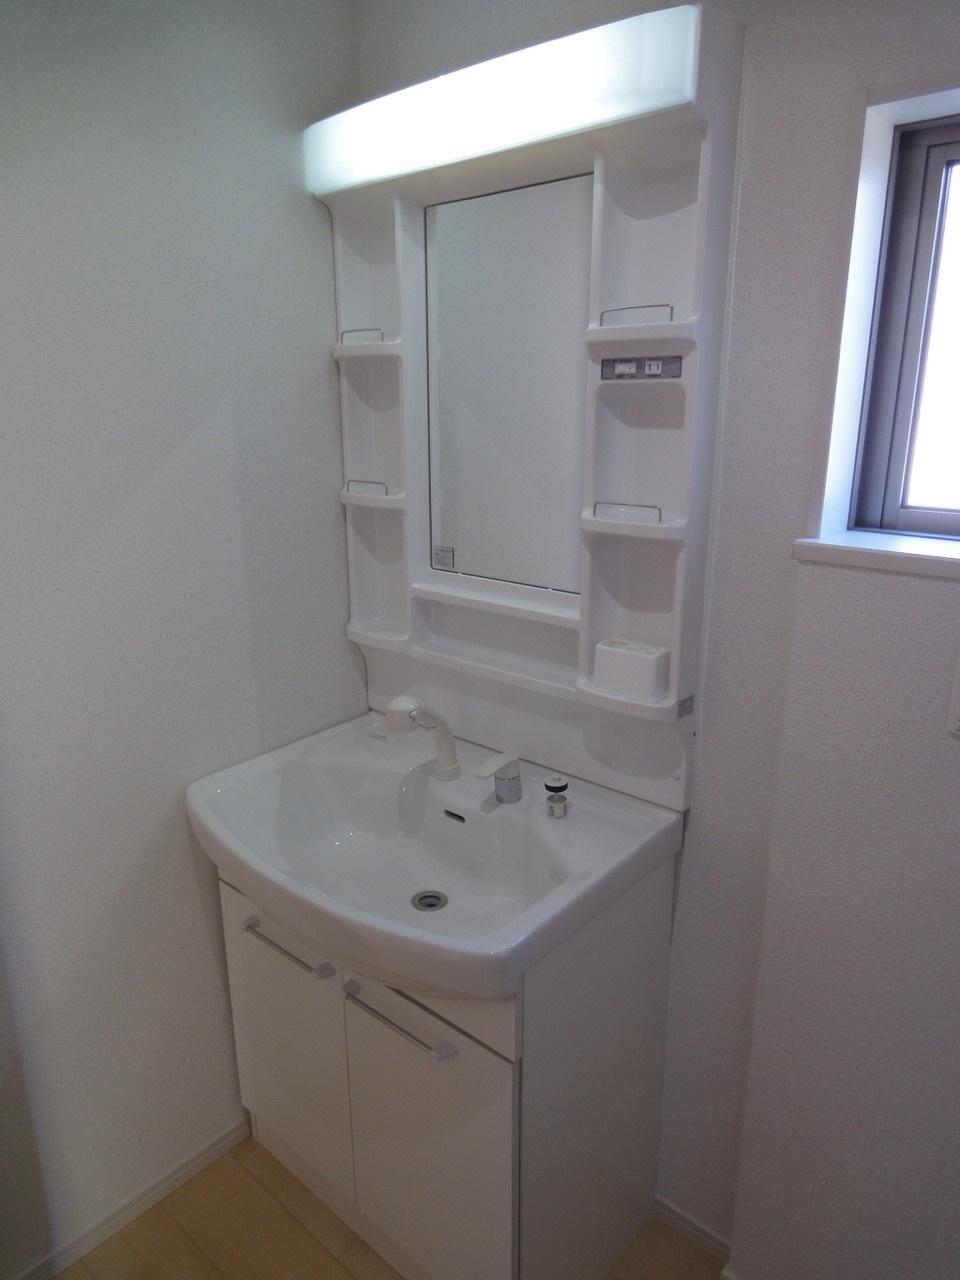 Wash basin, toilet. (2013.12.24 shooting) 1 Building